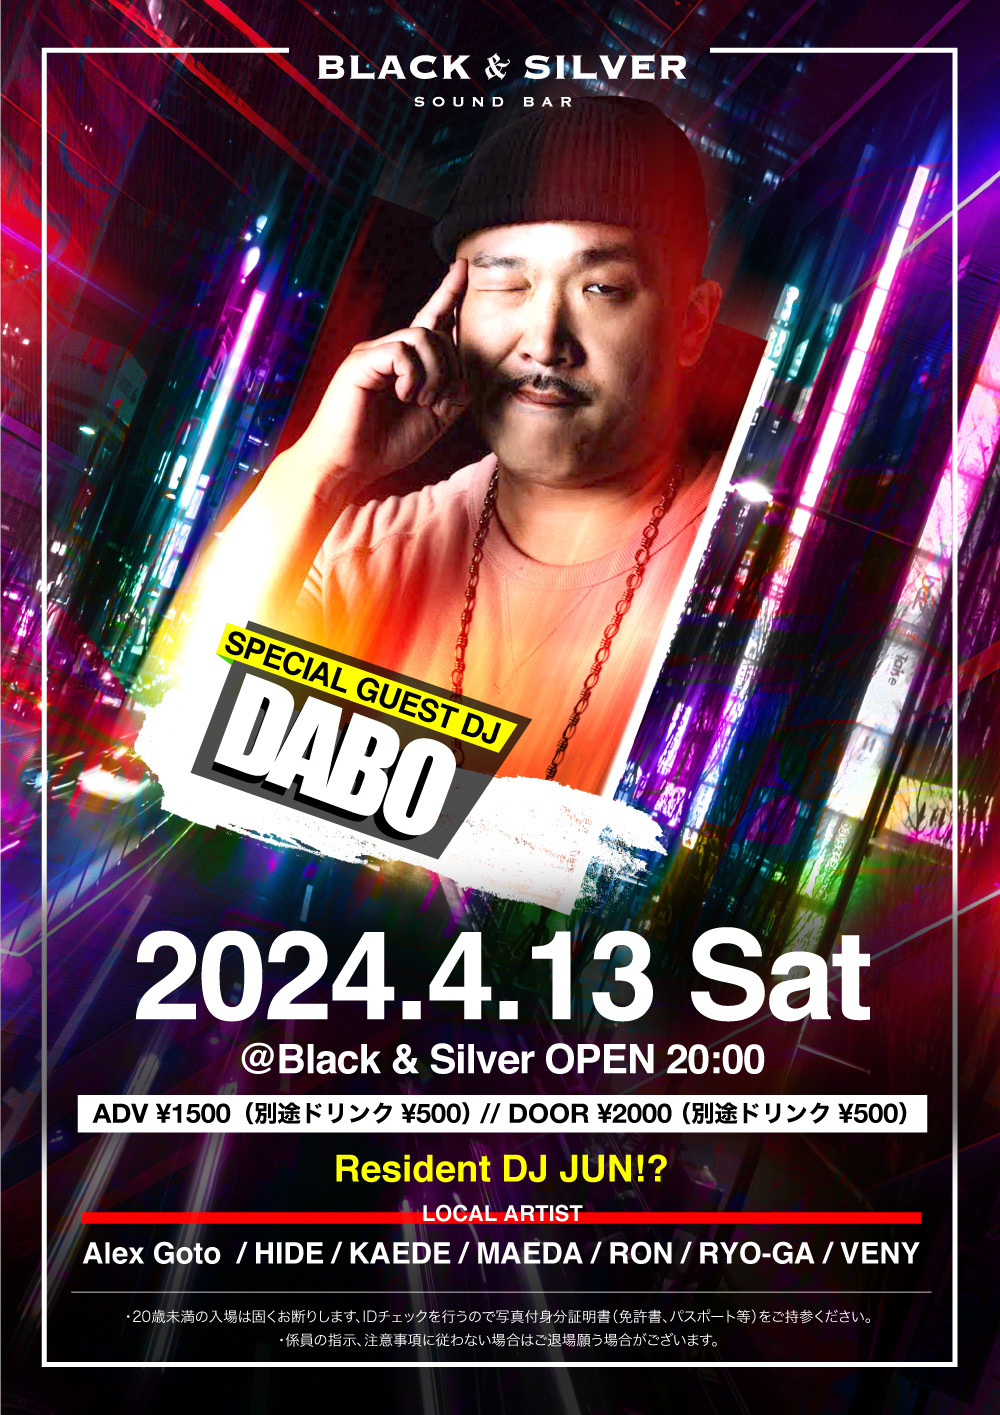 DJ DABO (4/13)